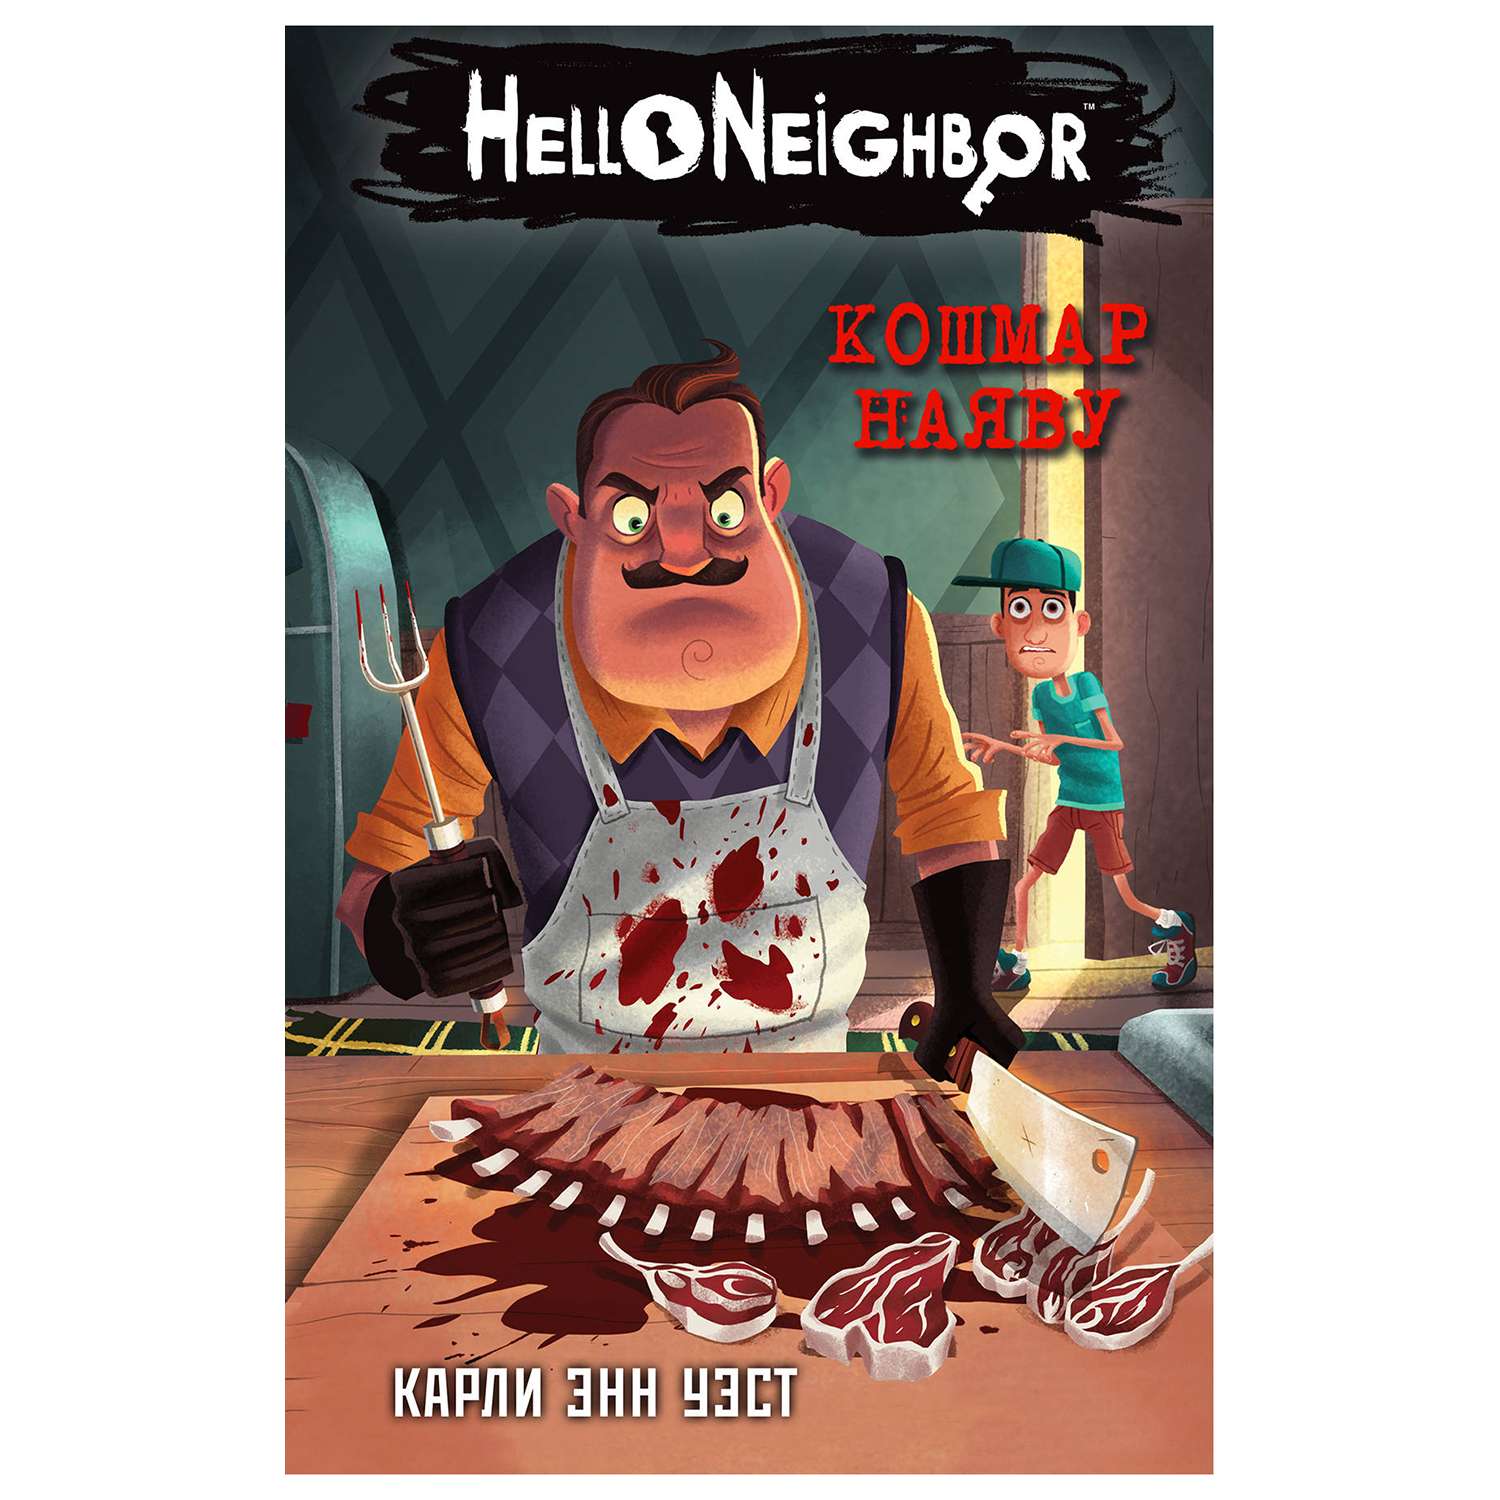 Книга Эксмо Hello Neighbor Кошмар наяву - фото 1